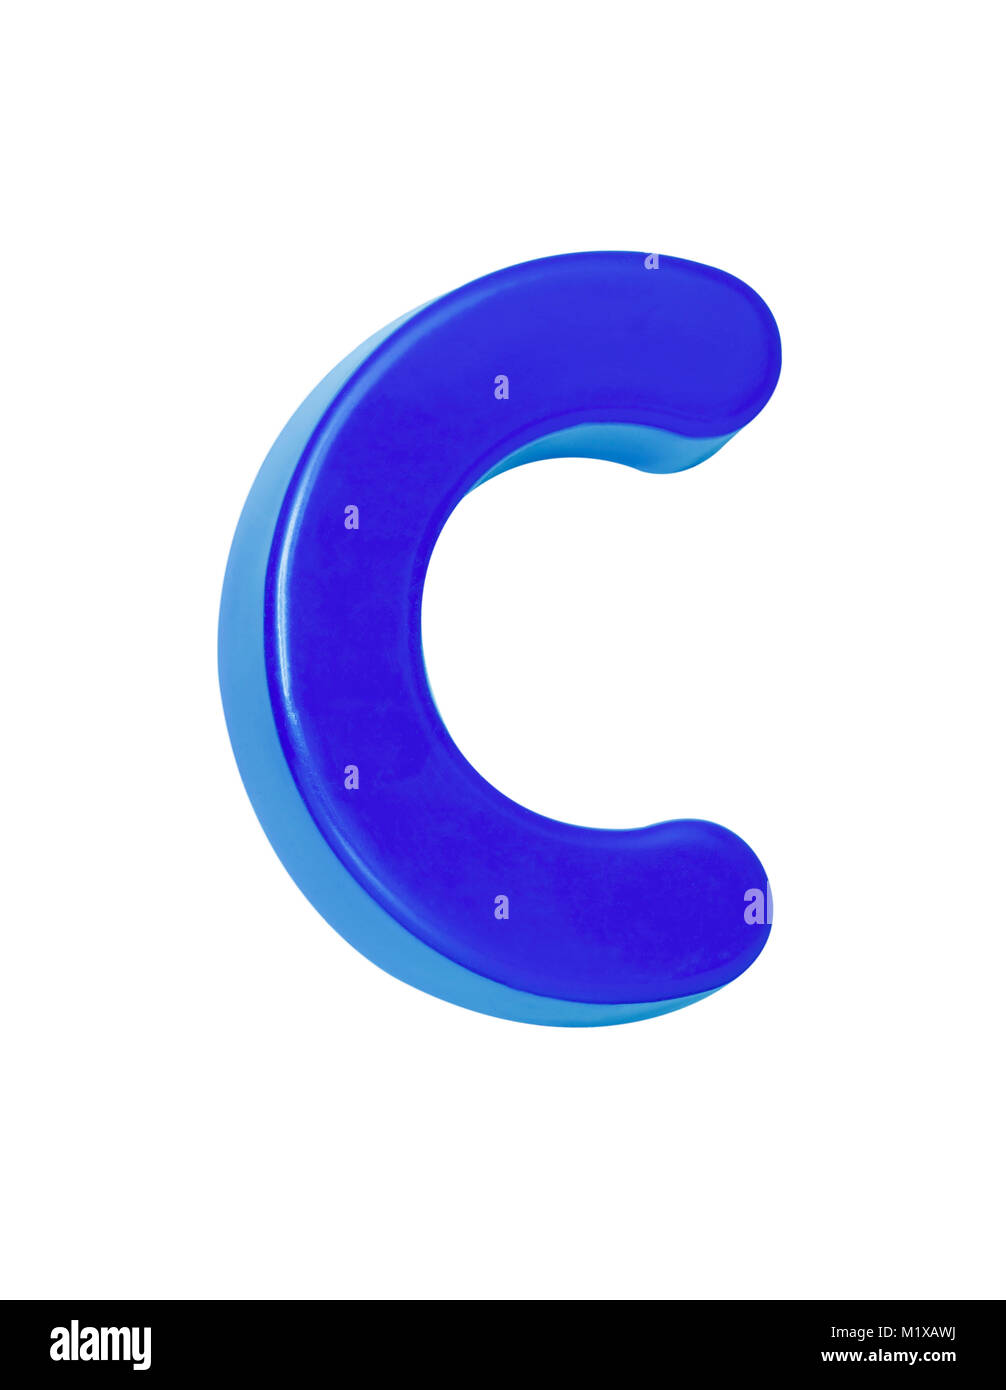 A cut out shot of a blue plastic letter 'C' Stock Photo